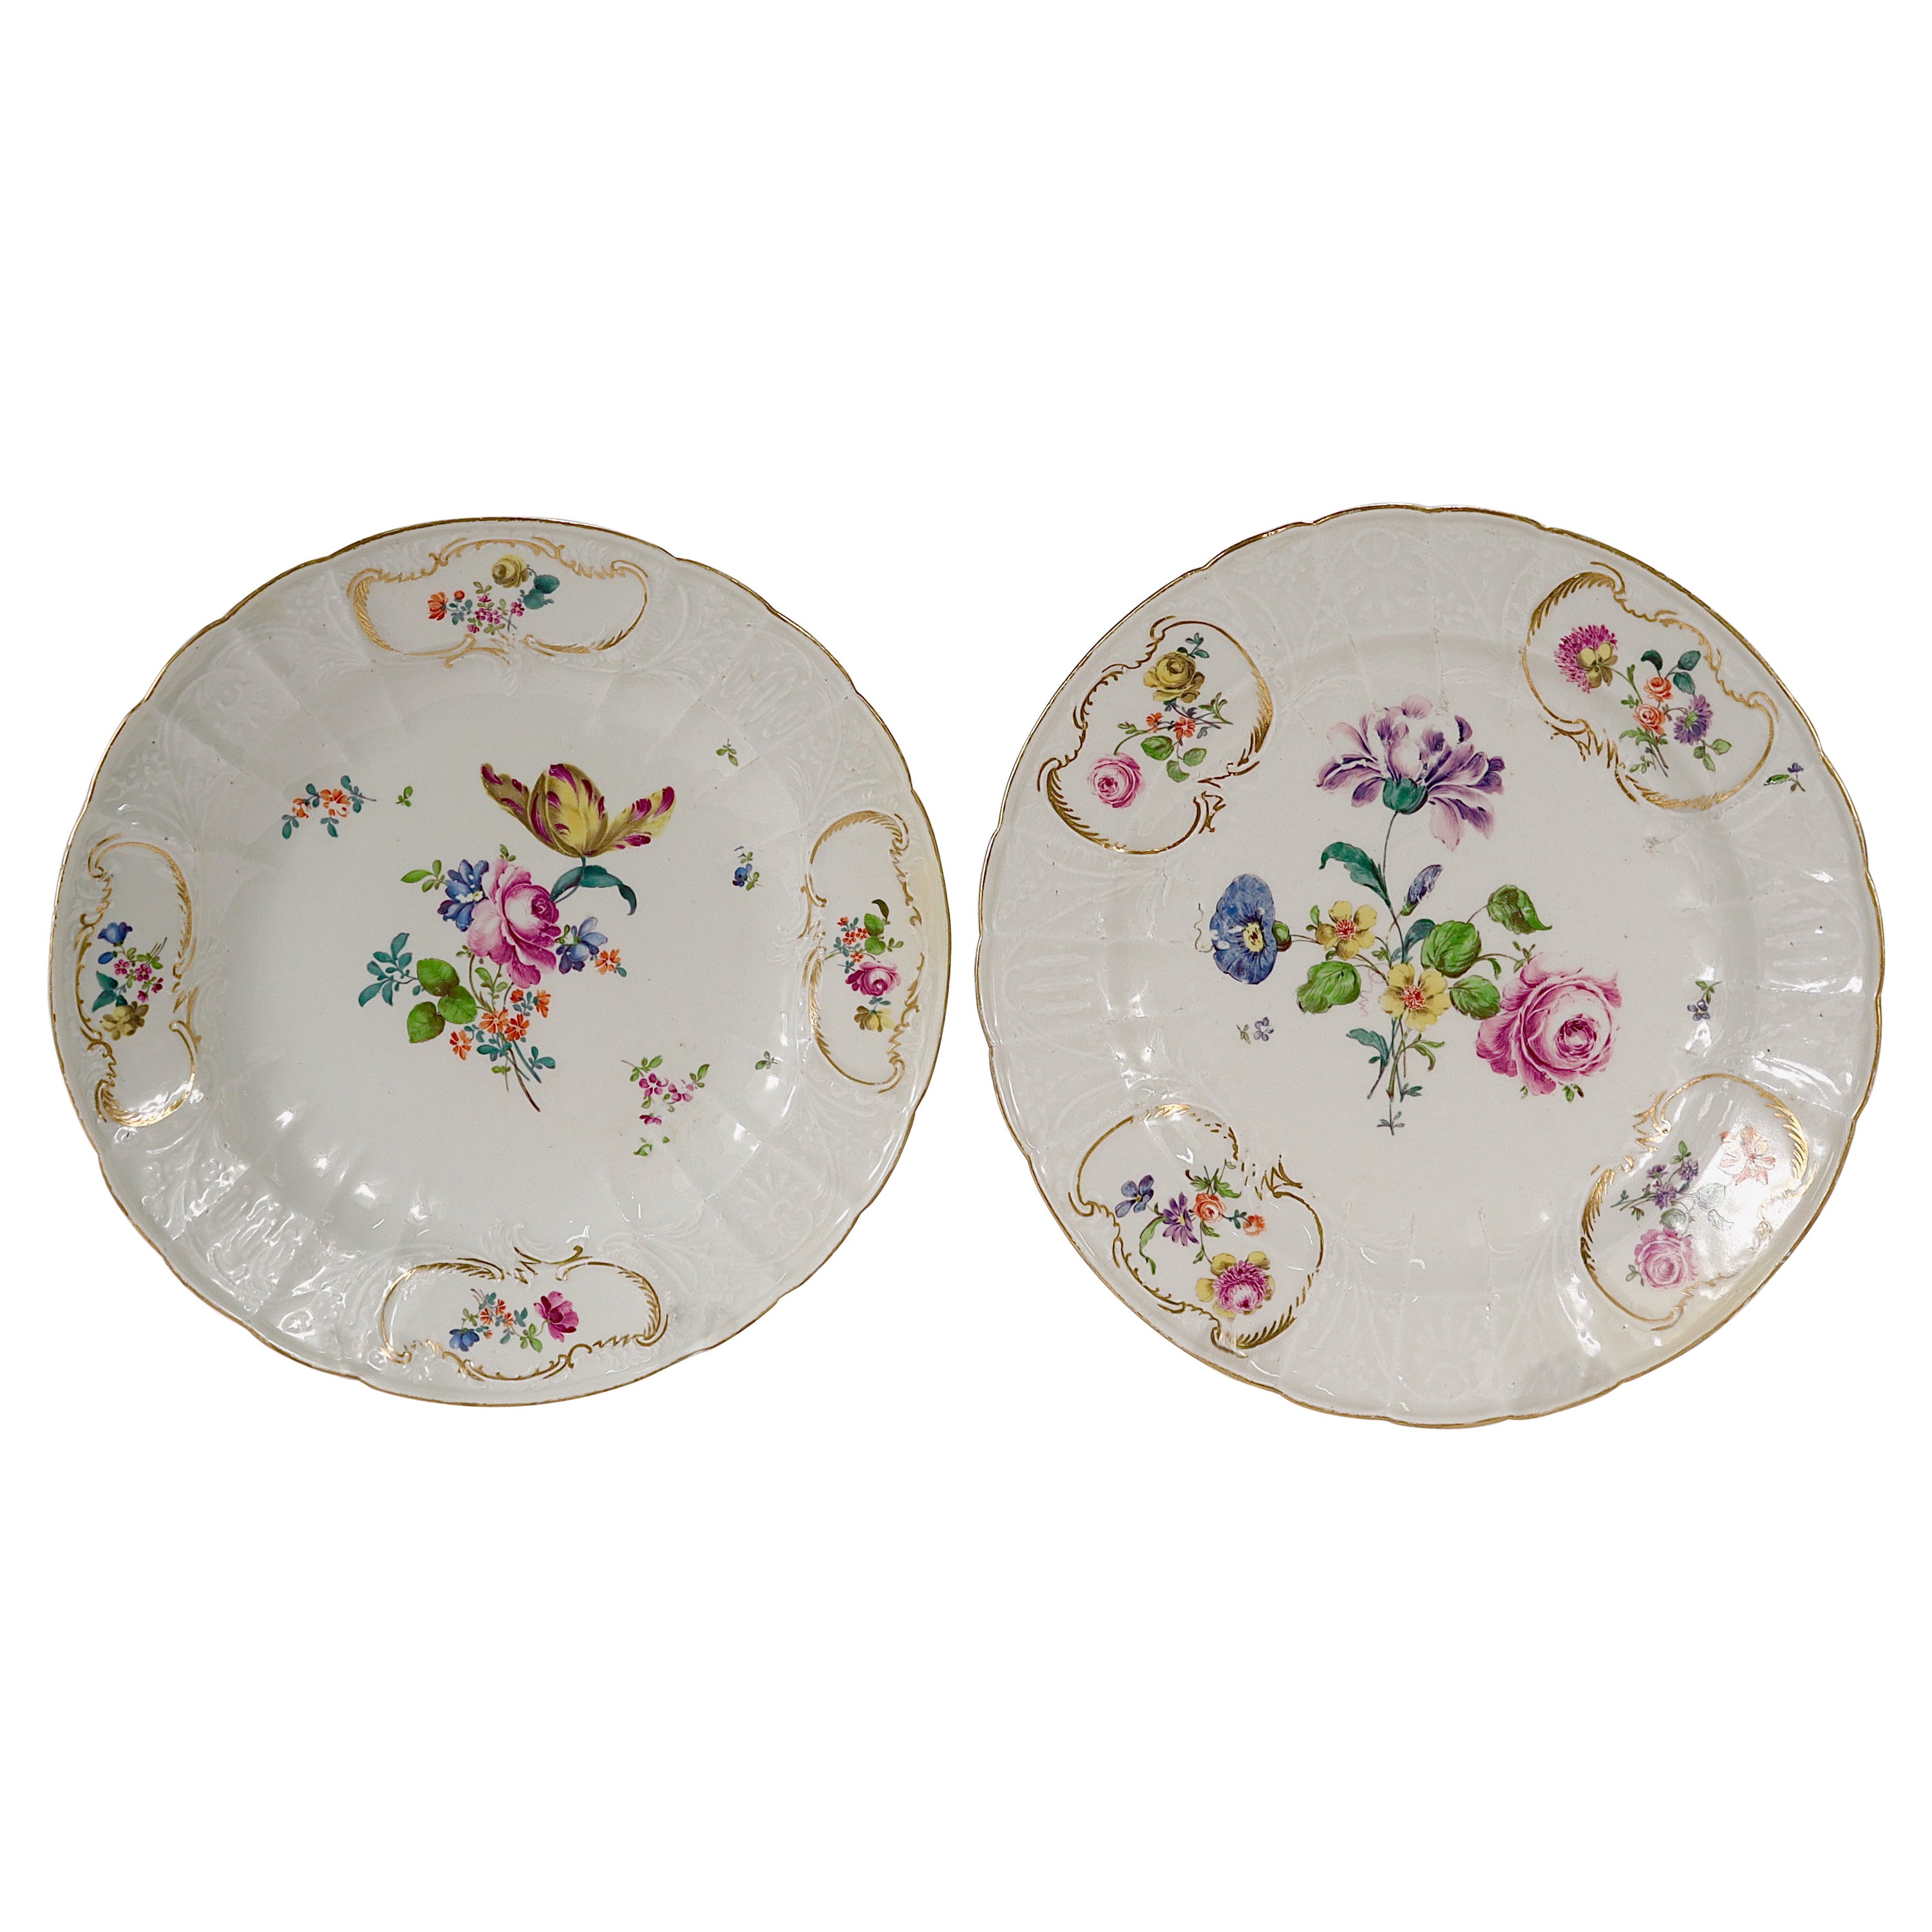 Pair Antique 18th C. Meissen Porcelain Dulong Variant Molded Plates with Flowers